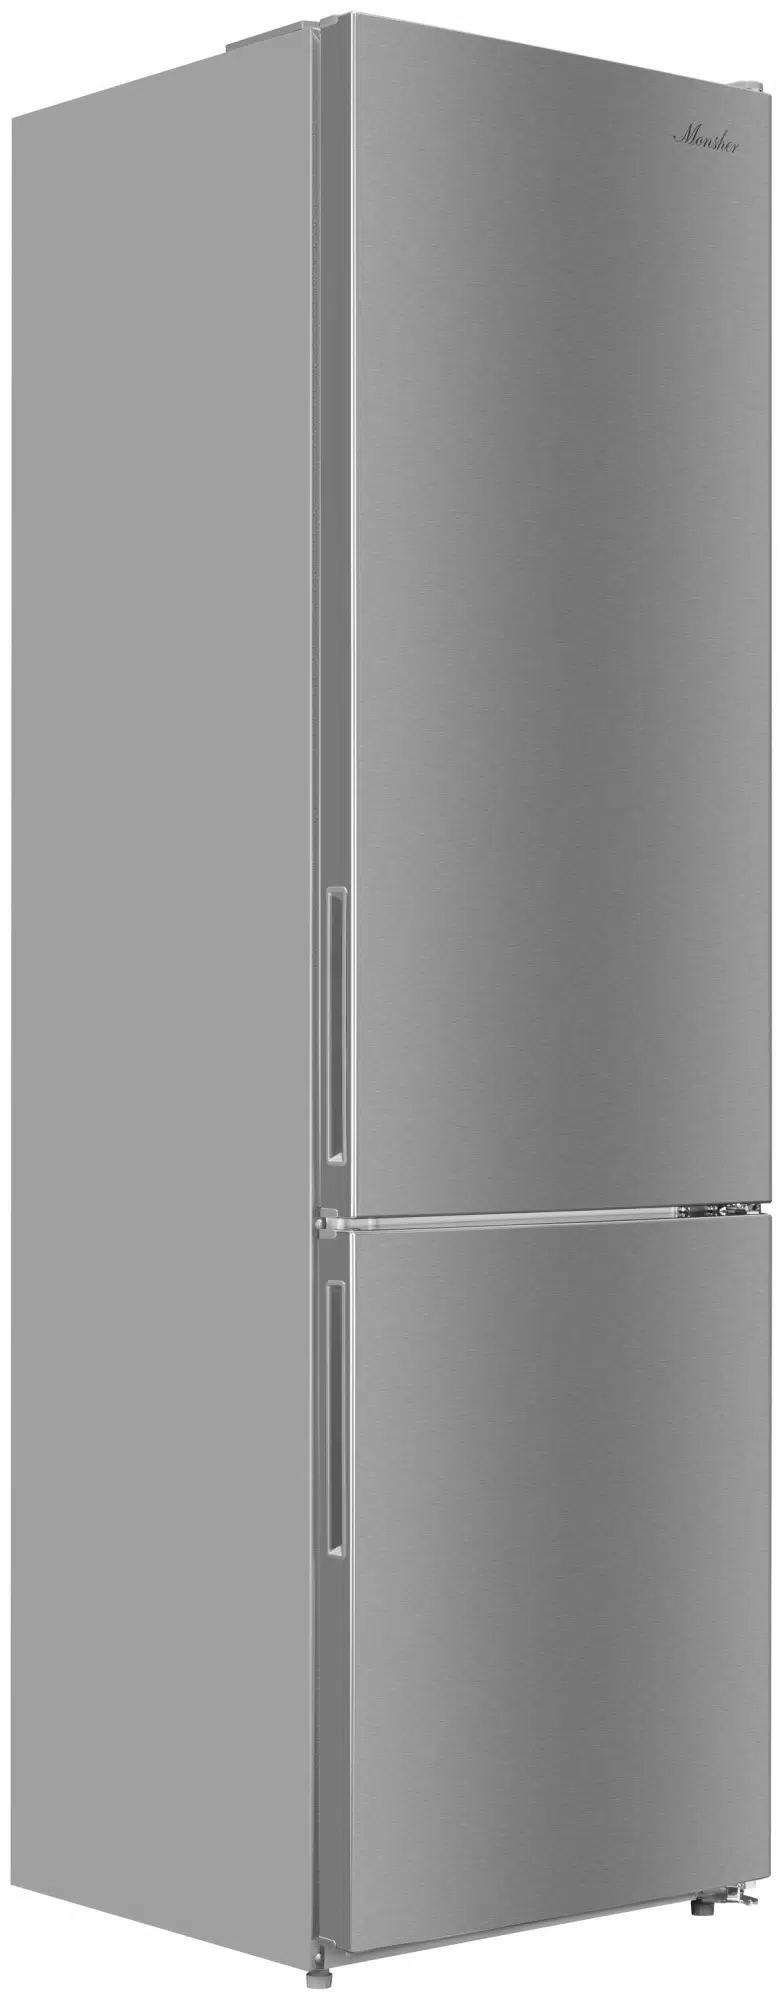 Холодильник Monsher MRF 61201 серебристый 